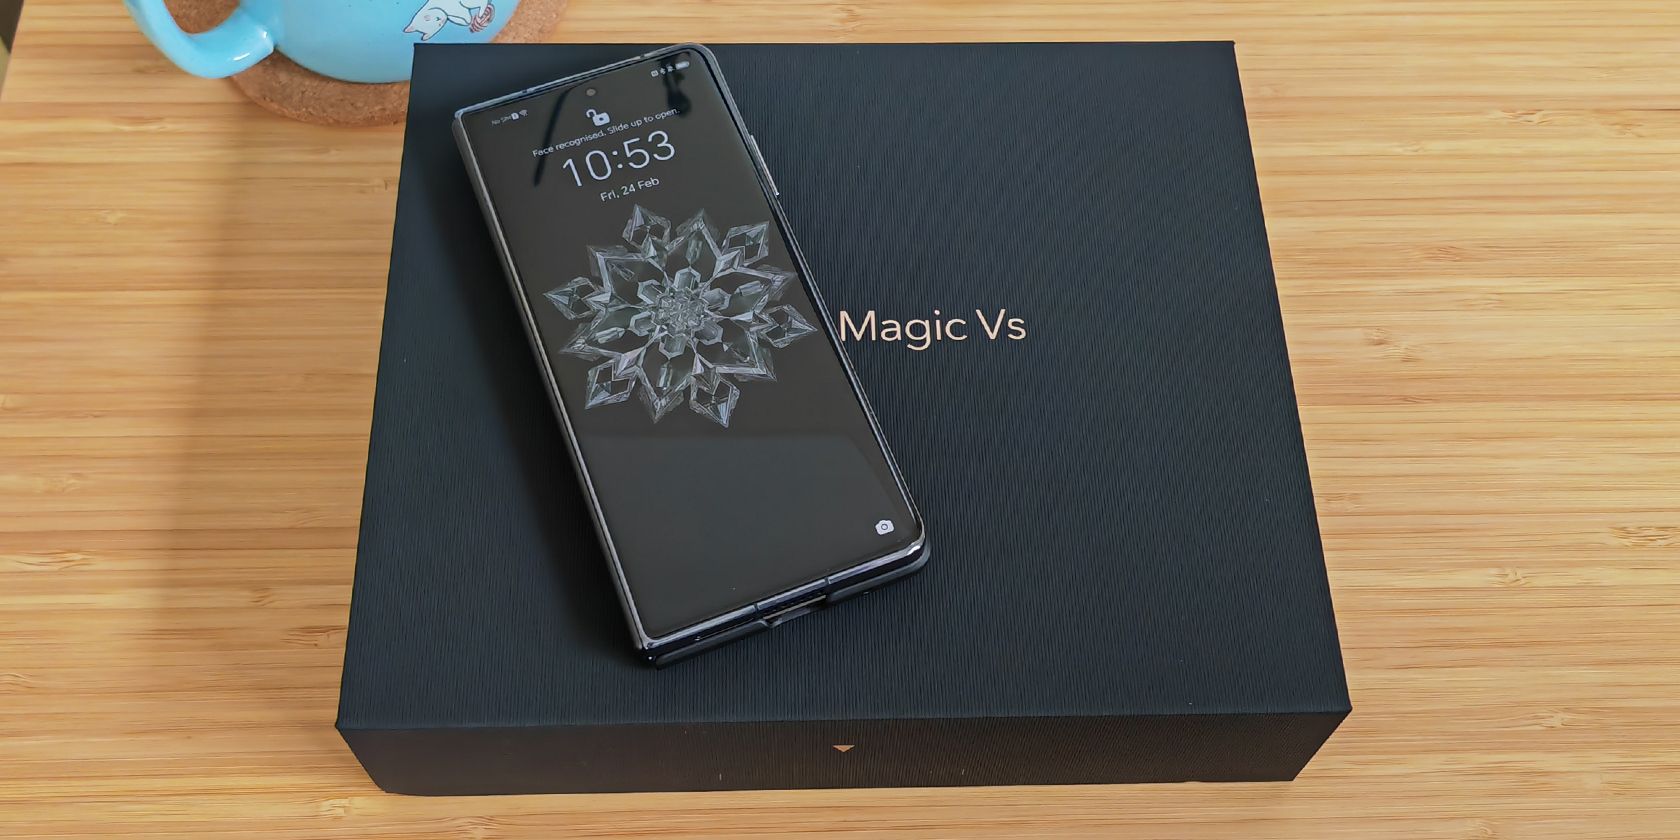 Honor Magic Vs foldable smartphone on top of box